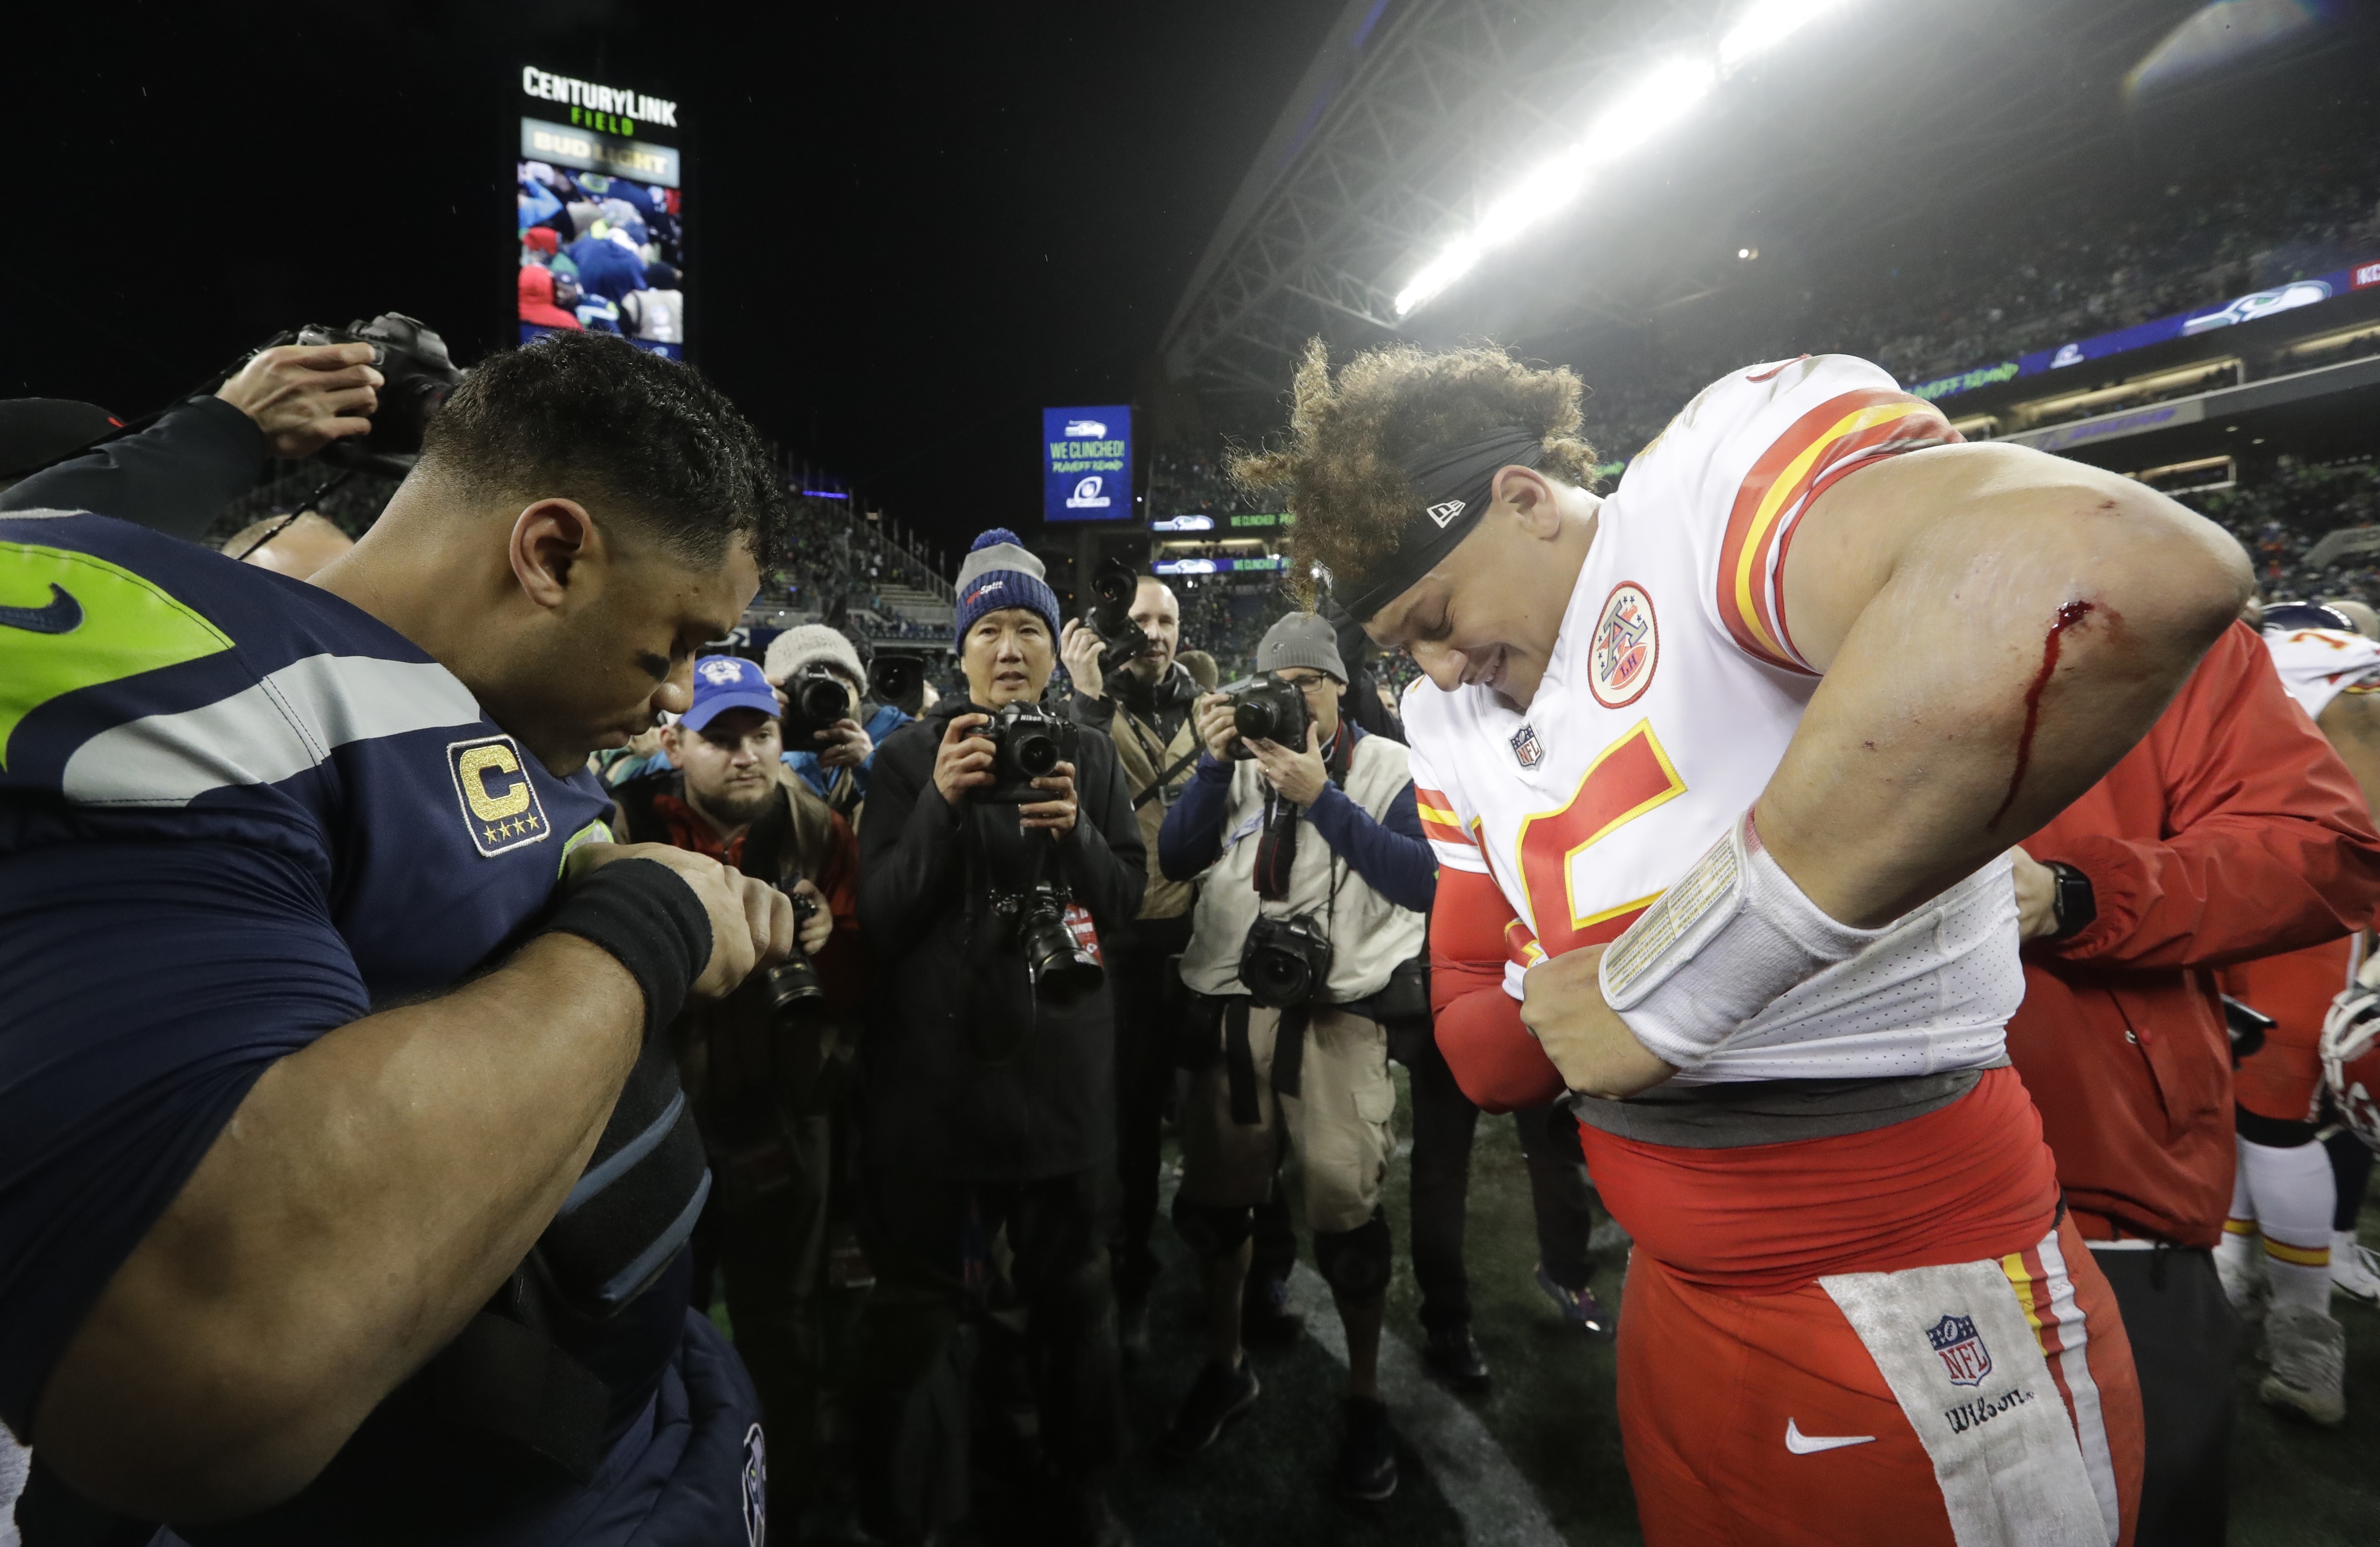 NFL bans jersey swaps after games